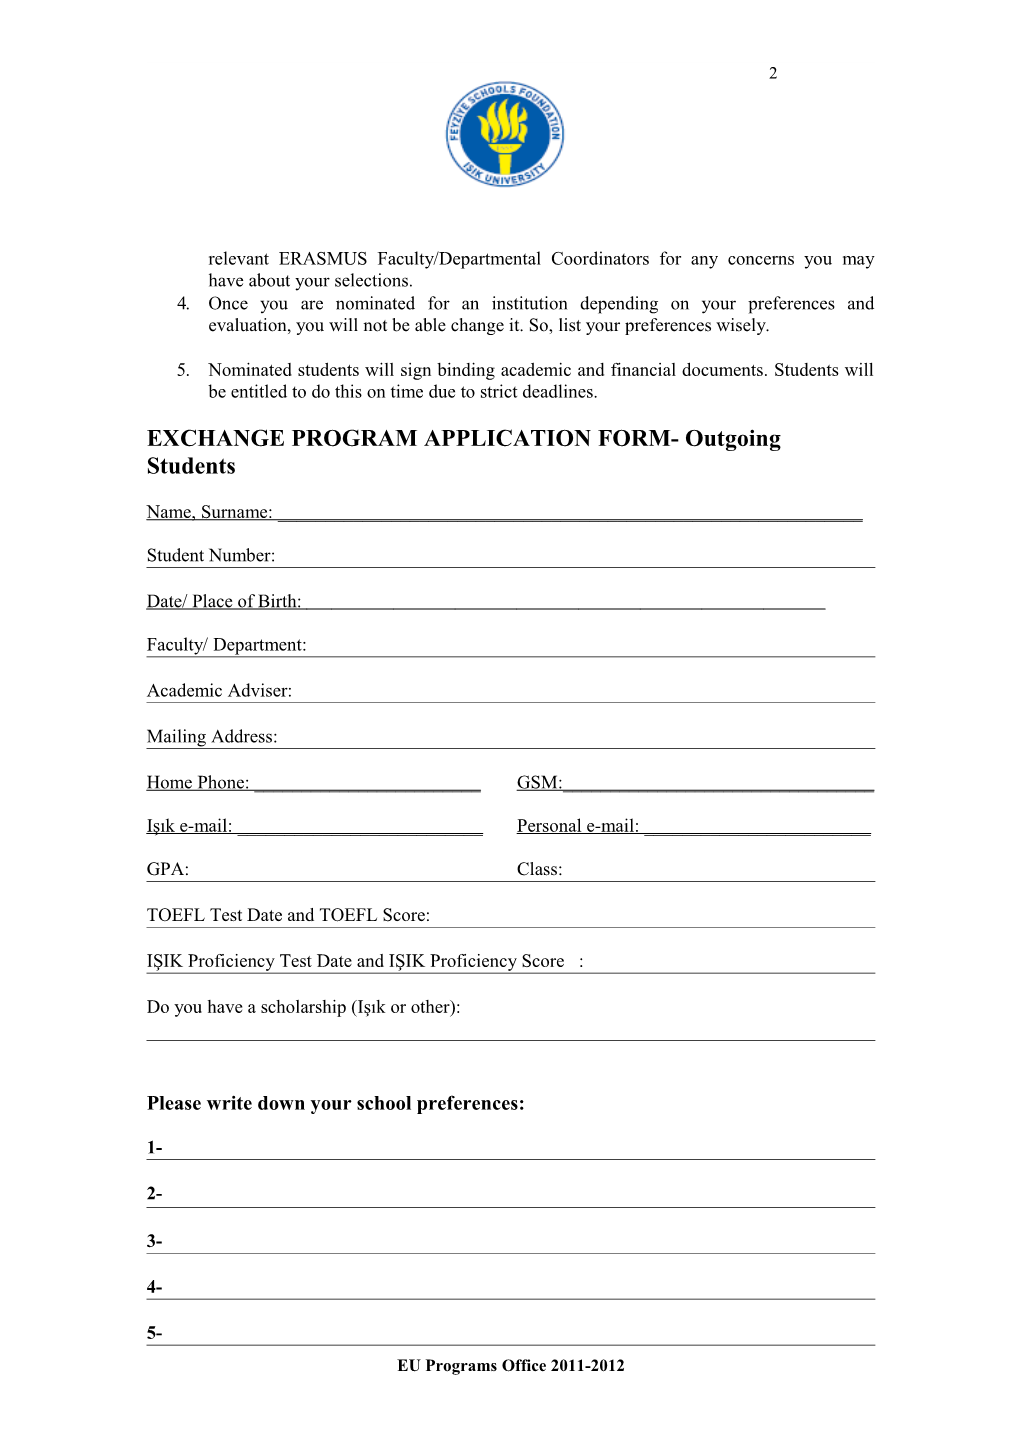 Işık University Exchange Programs Application Form